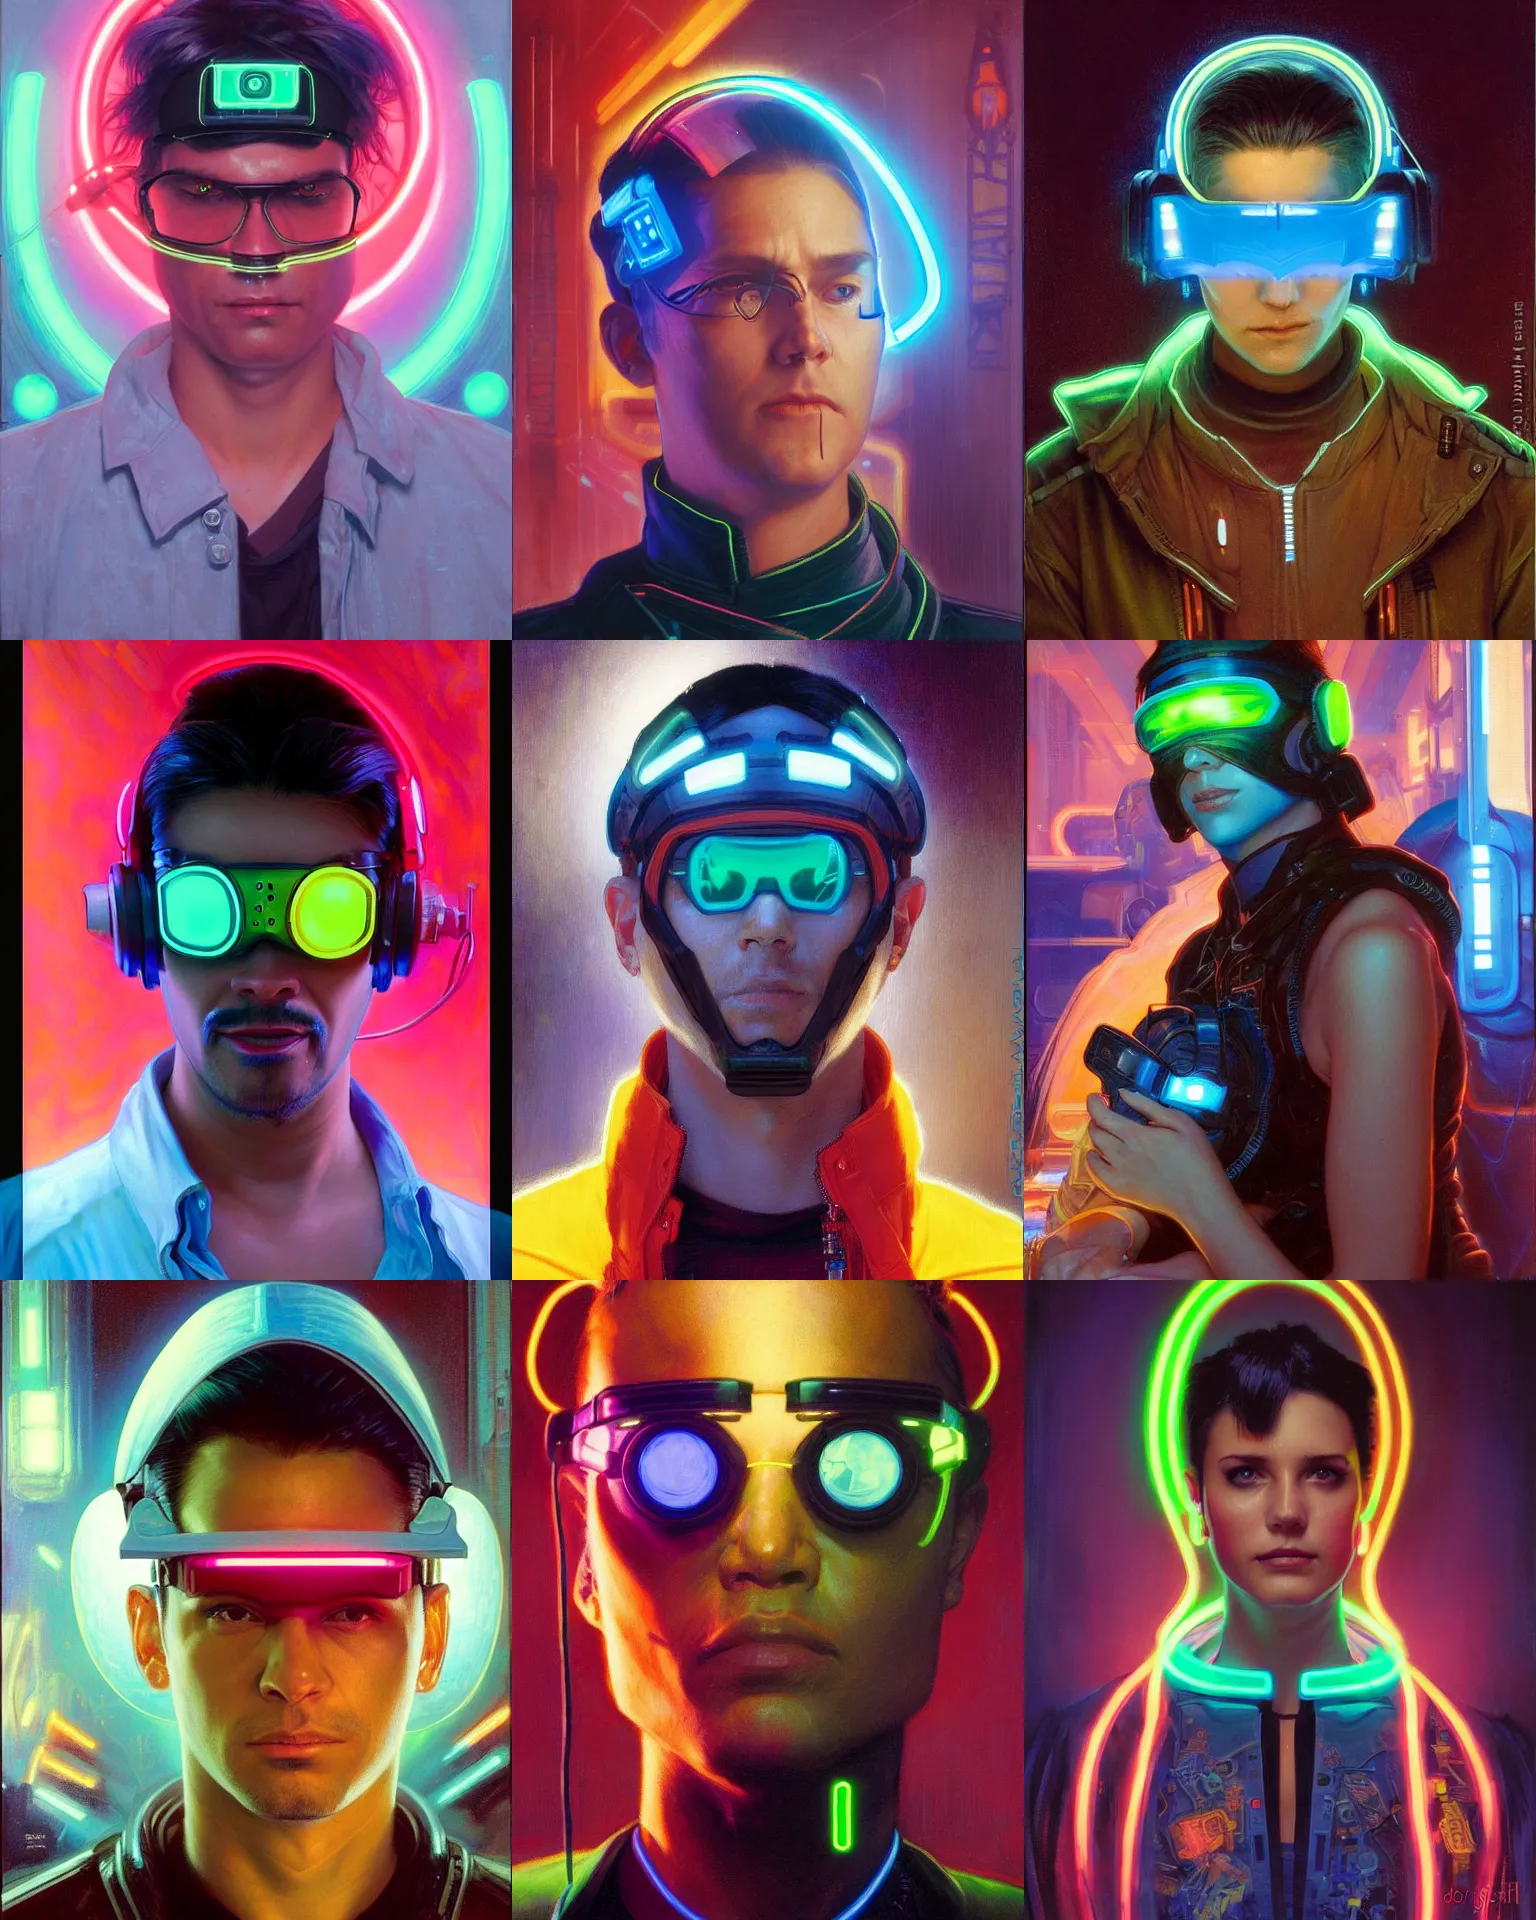 Prompt: neon cyberpunk hacker with glowing geordi visor and headset headshot portrait painting by donato giancola, rhads, hayao miyazaki, alphonse mucha, mead schaeffer fashion photography